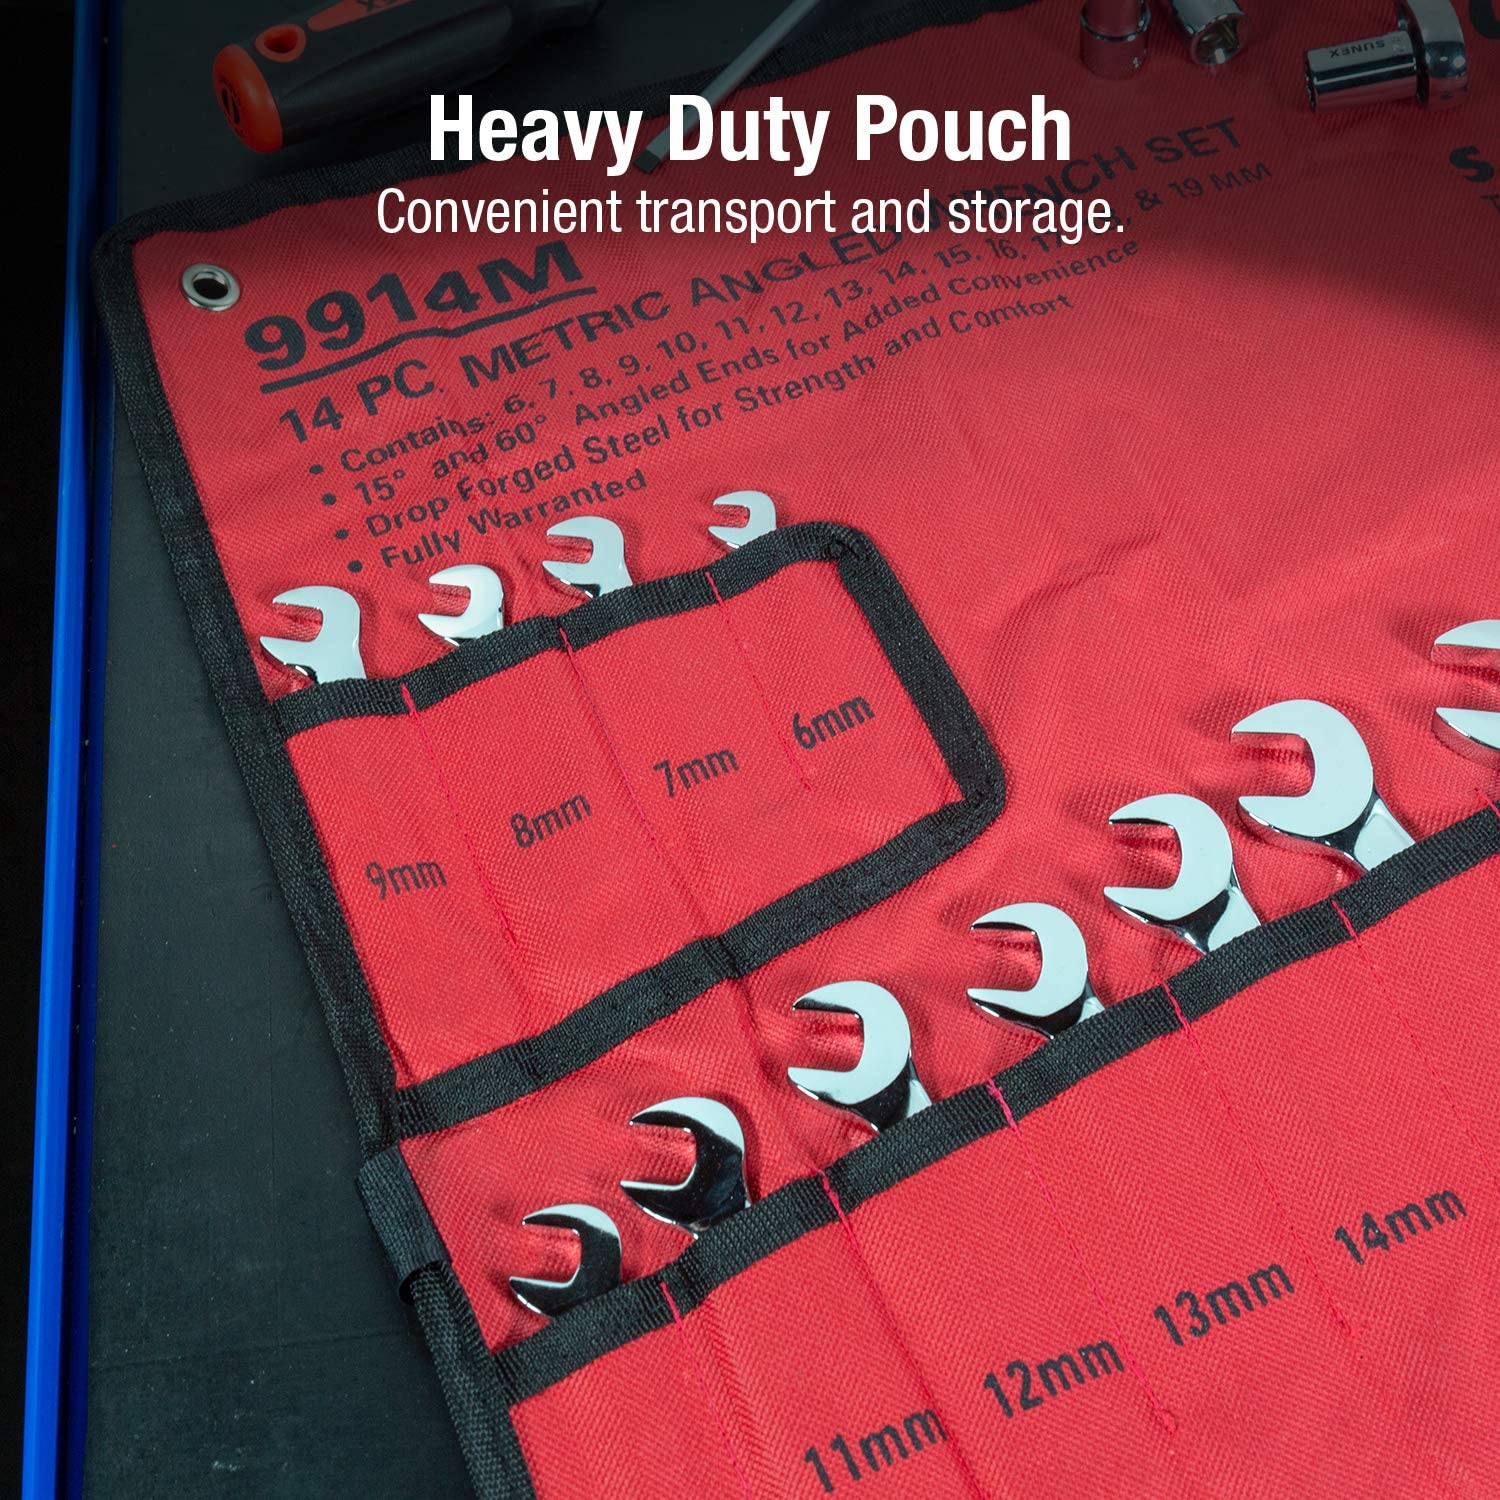 Sunex 9914MA 14 Piece Angle Head Metric Wrench Set (FULL POLISH) CRV - MPR Tools & Equipment